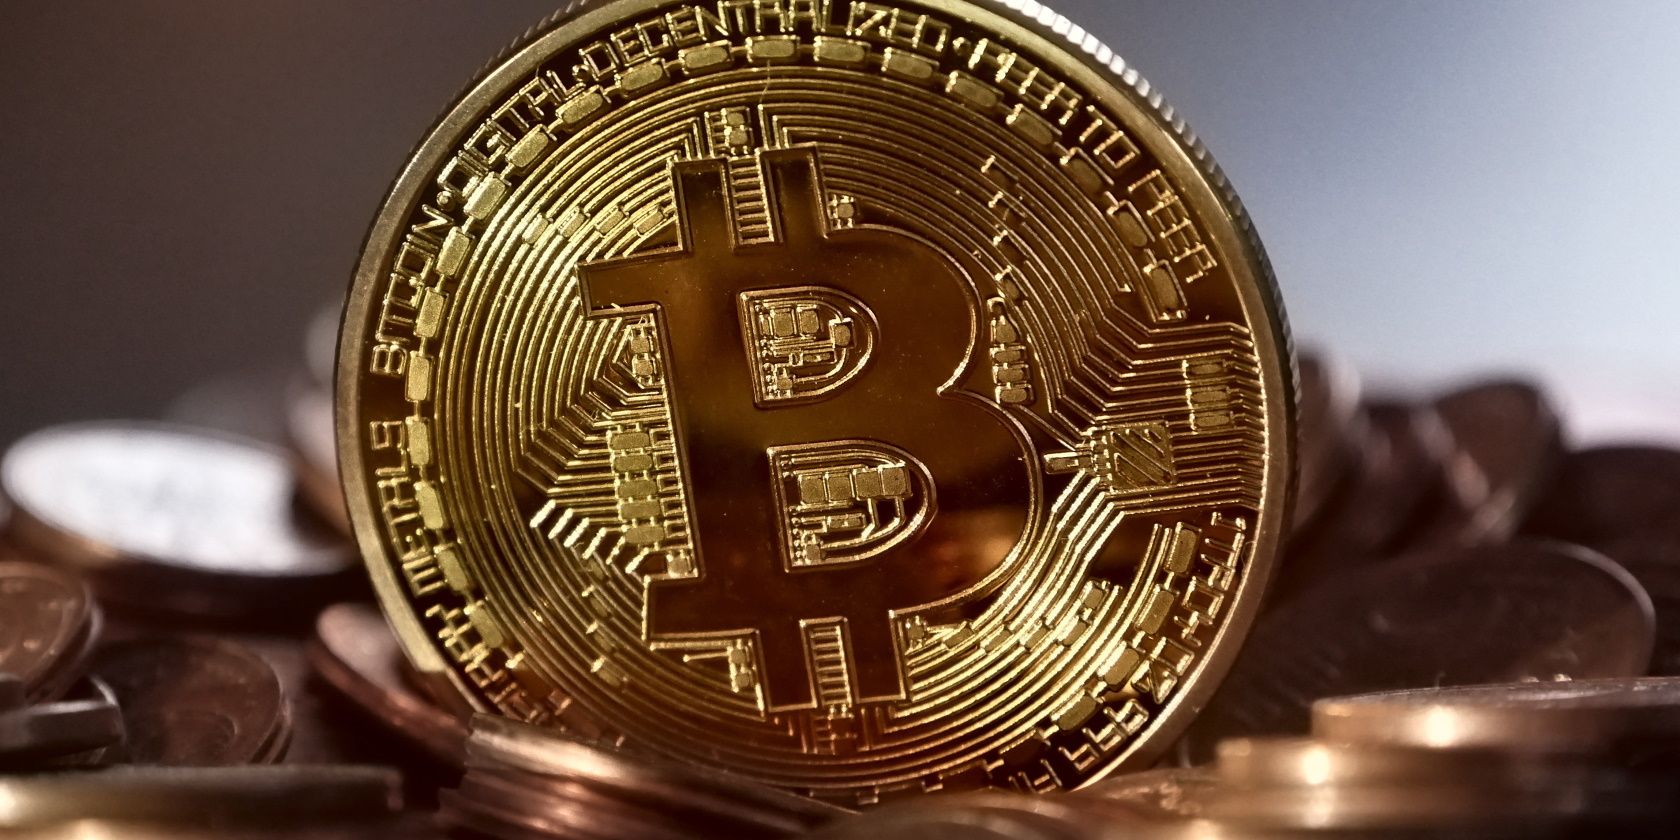 what happens after 21 million bitcoins value